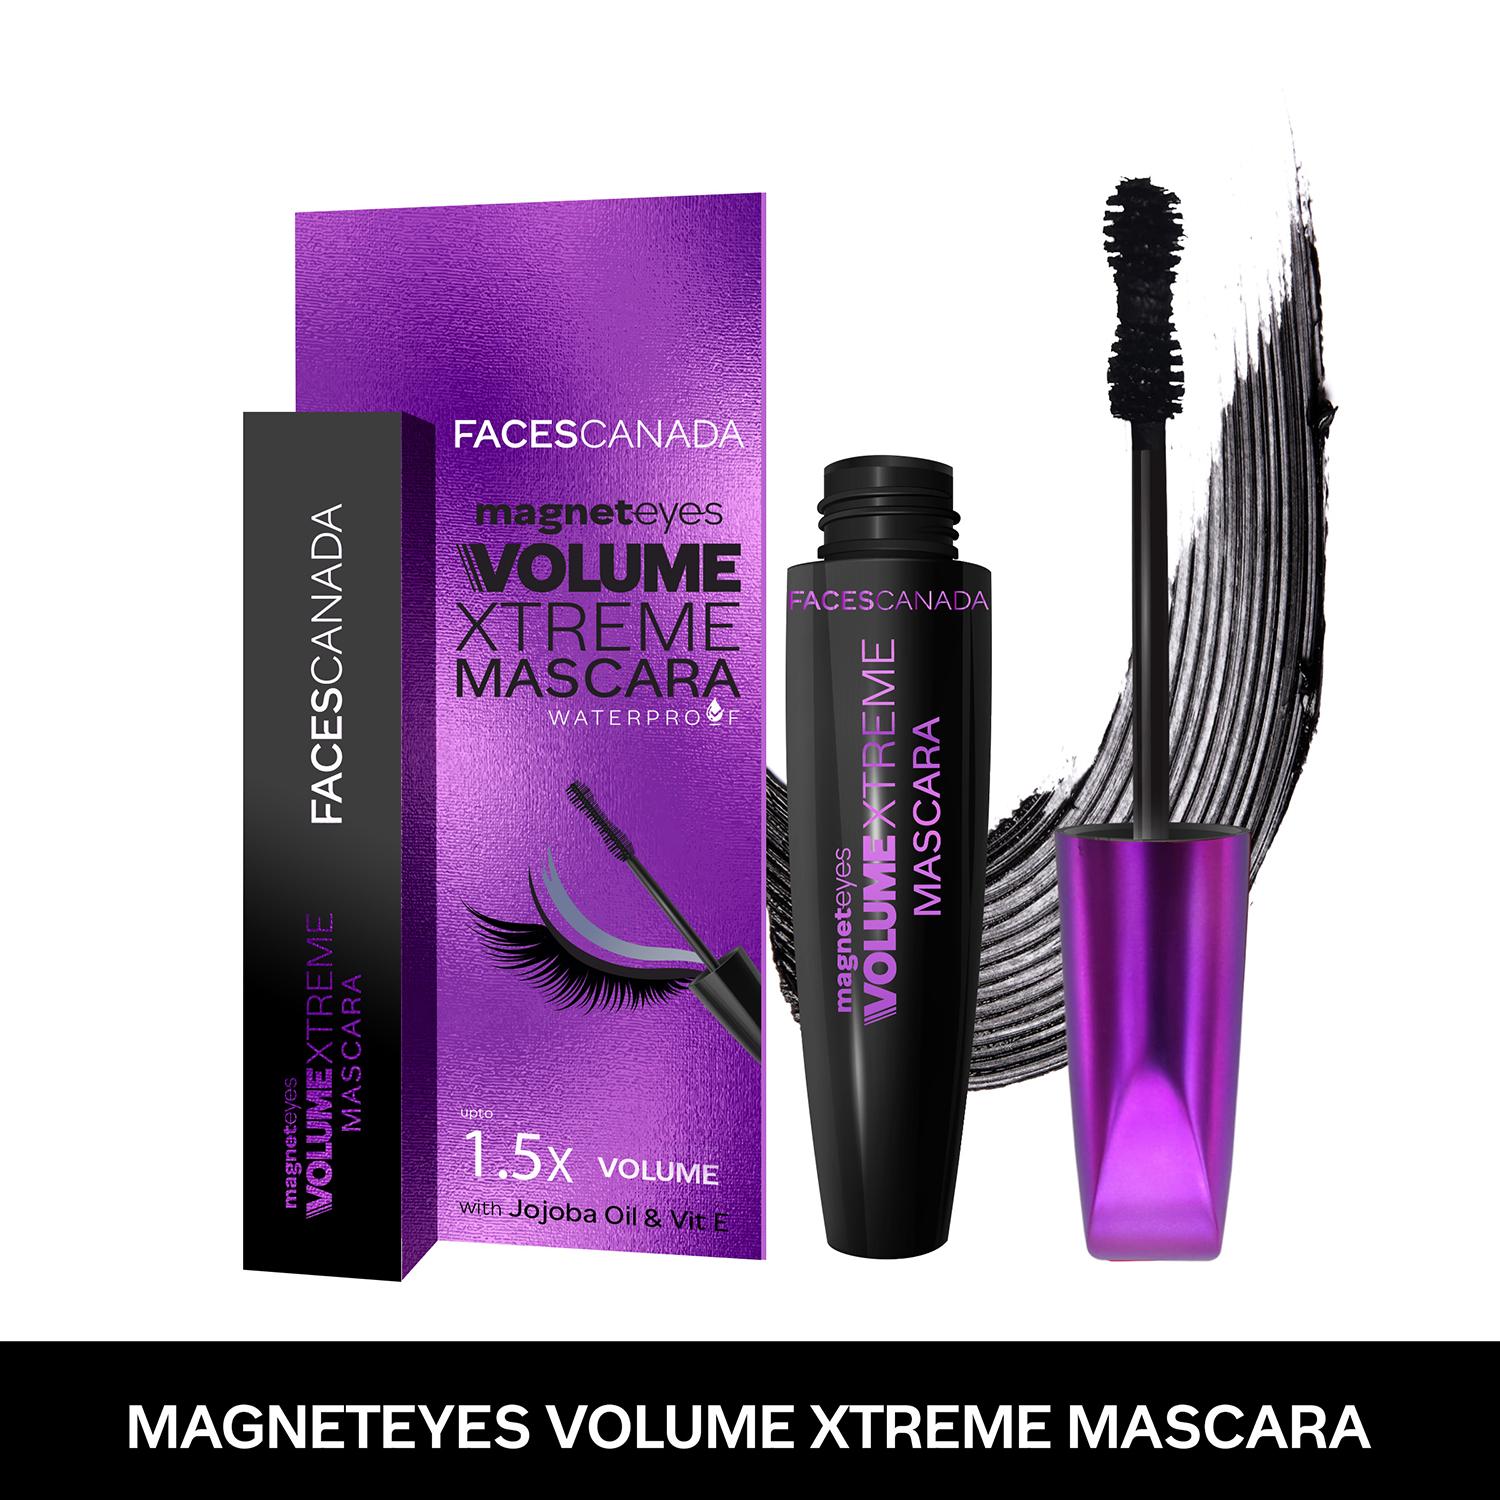 Faces Canada Magneteyes Volume Xtreme Mascara,Lengthens Lashes, Waterproof, Long Wear - Black (8 g)